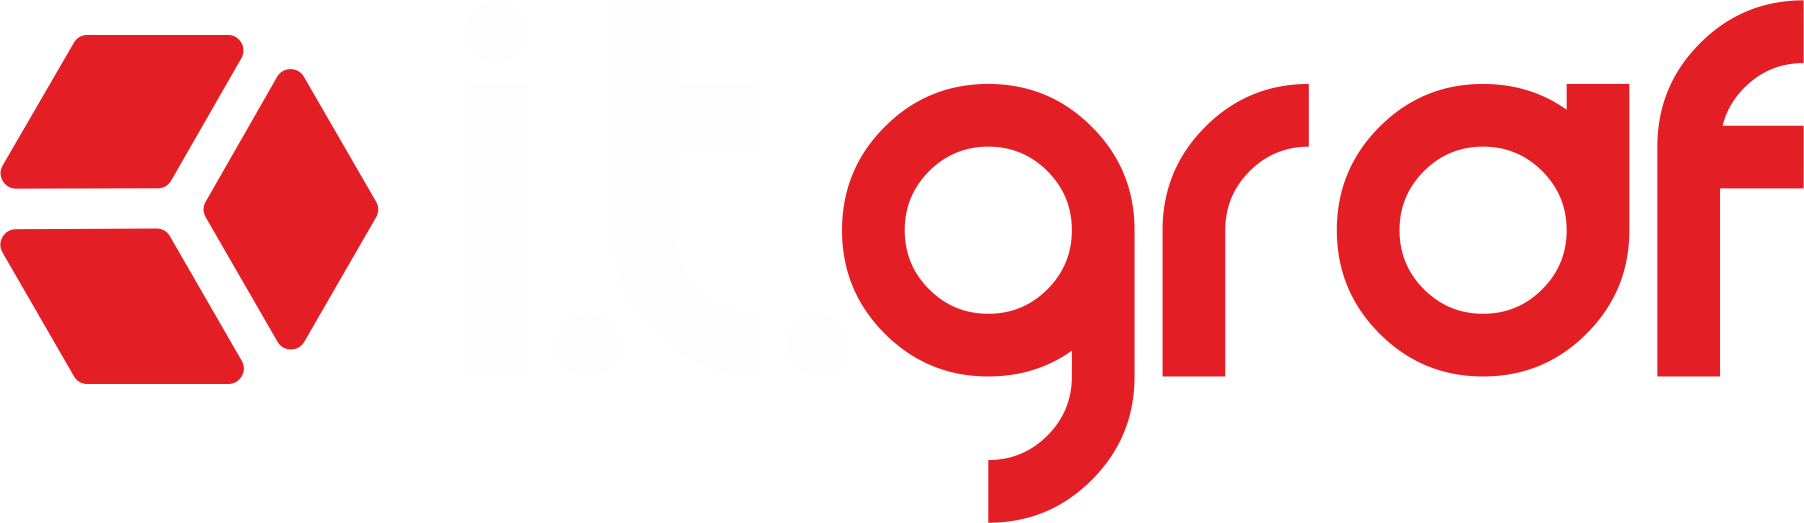 I.T.graf logo